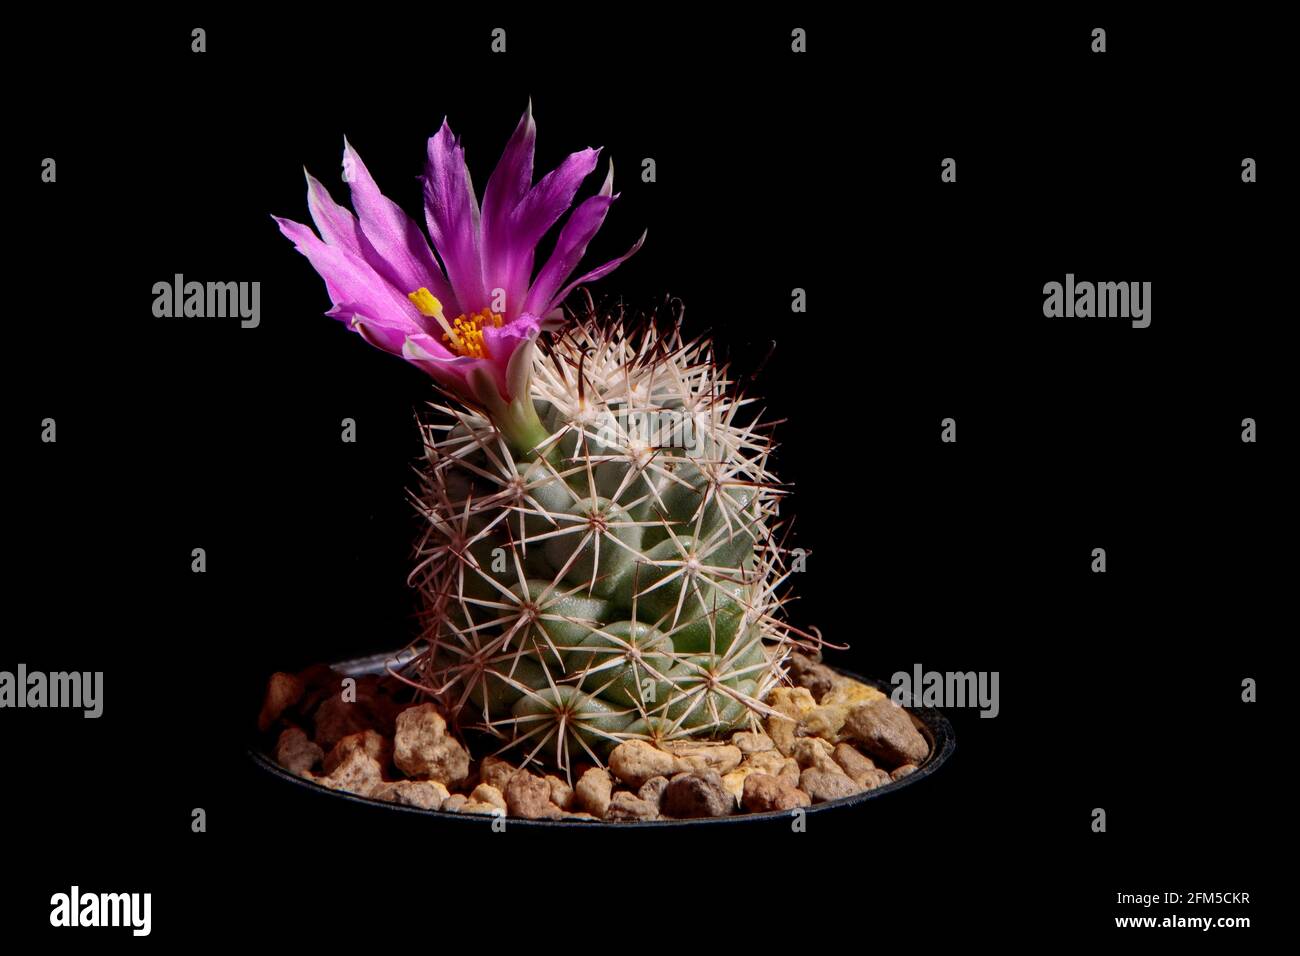 pink flower of mammillaria cactus blooming against dark background Stock Photo